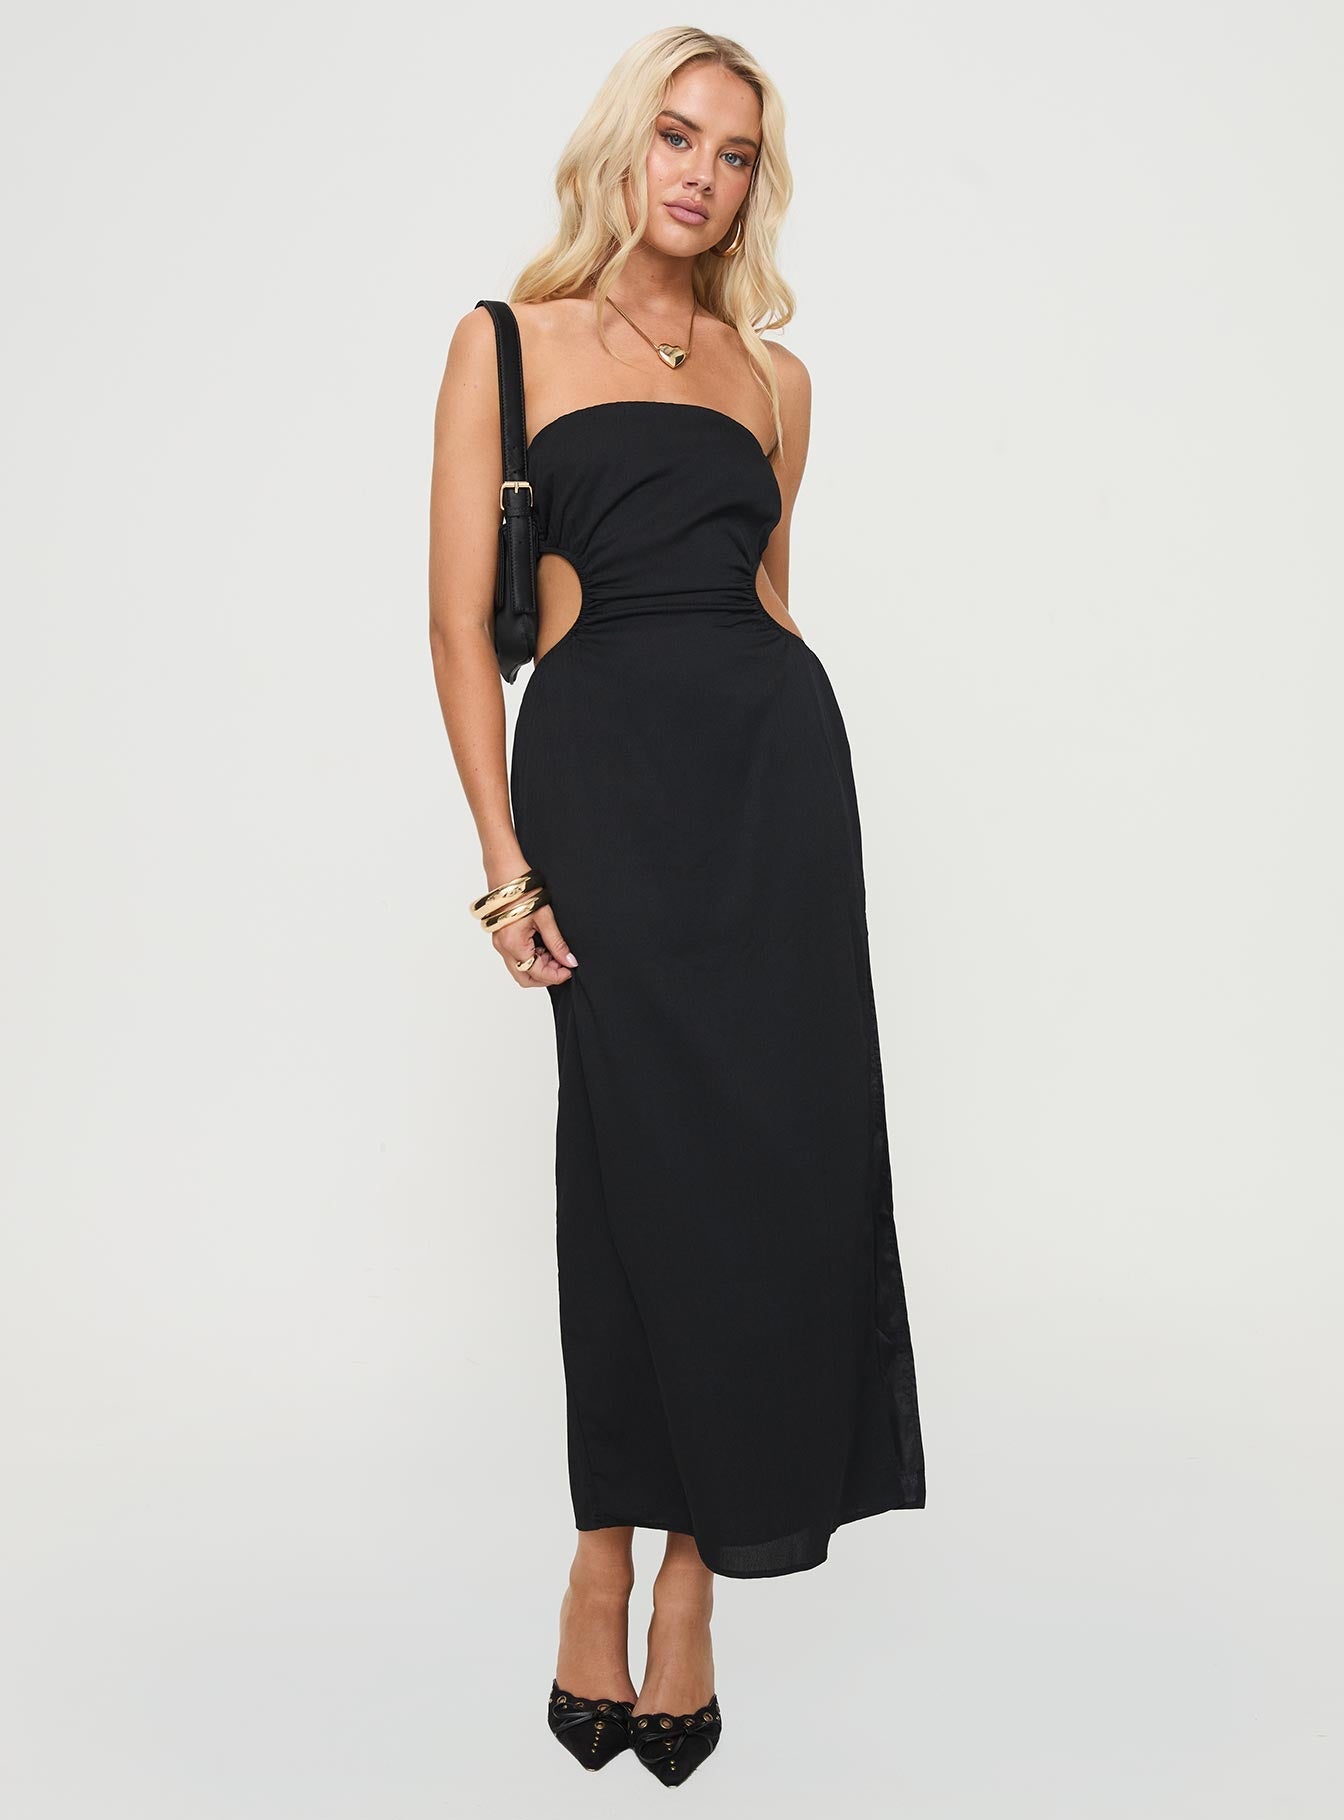 Shop Formal Dress - Tailor Strapless Maxi Dress Black fifth image